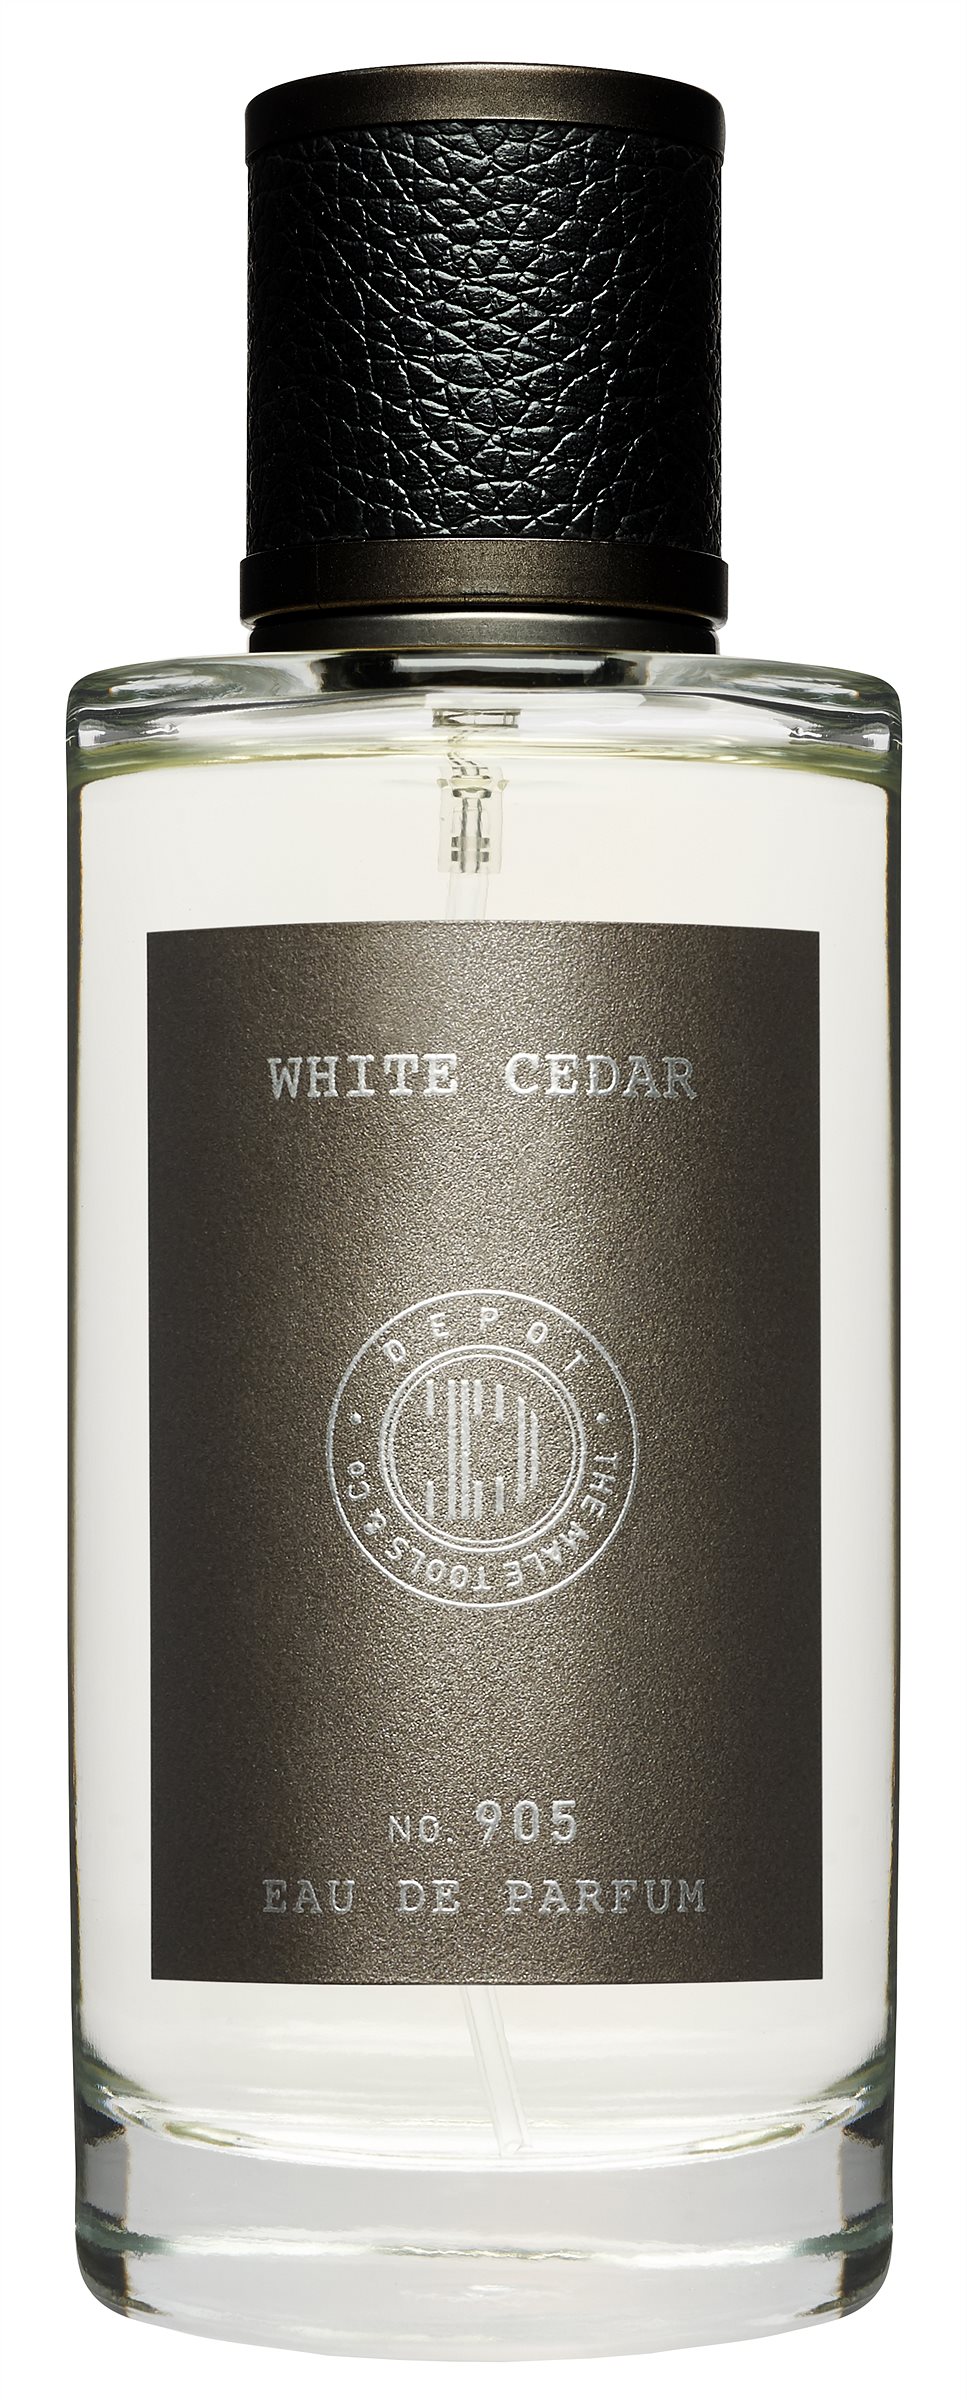 DEPOT_905 White Cedar Parfum_EUR 88,-